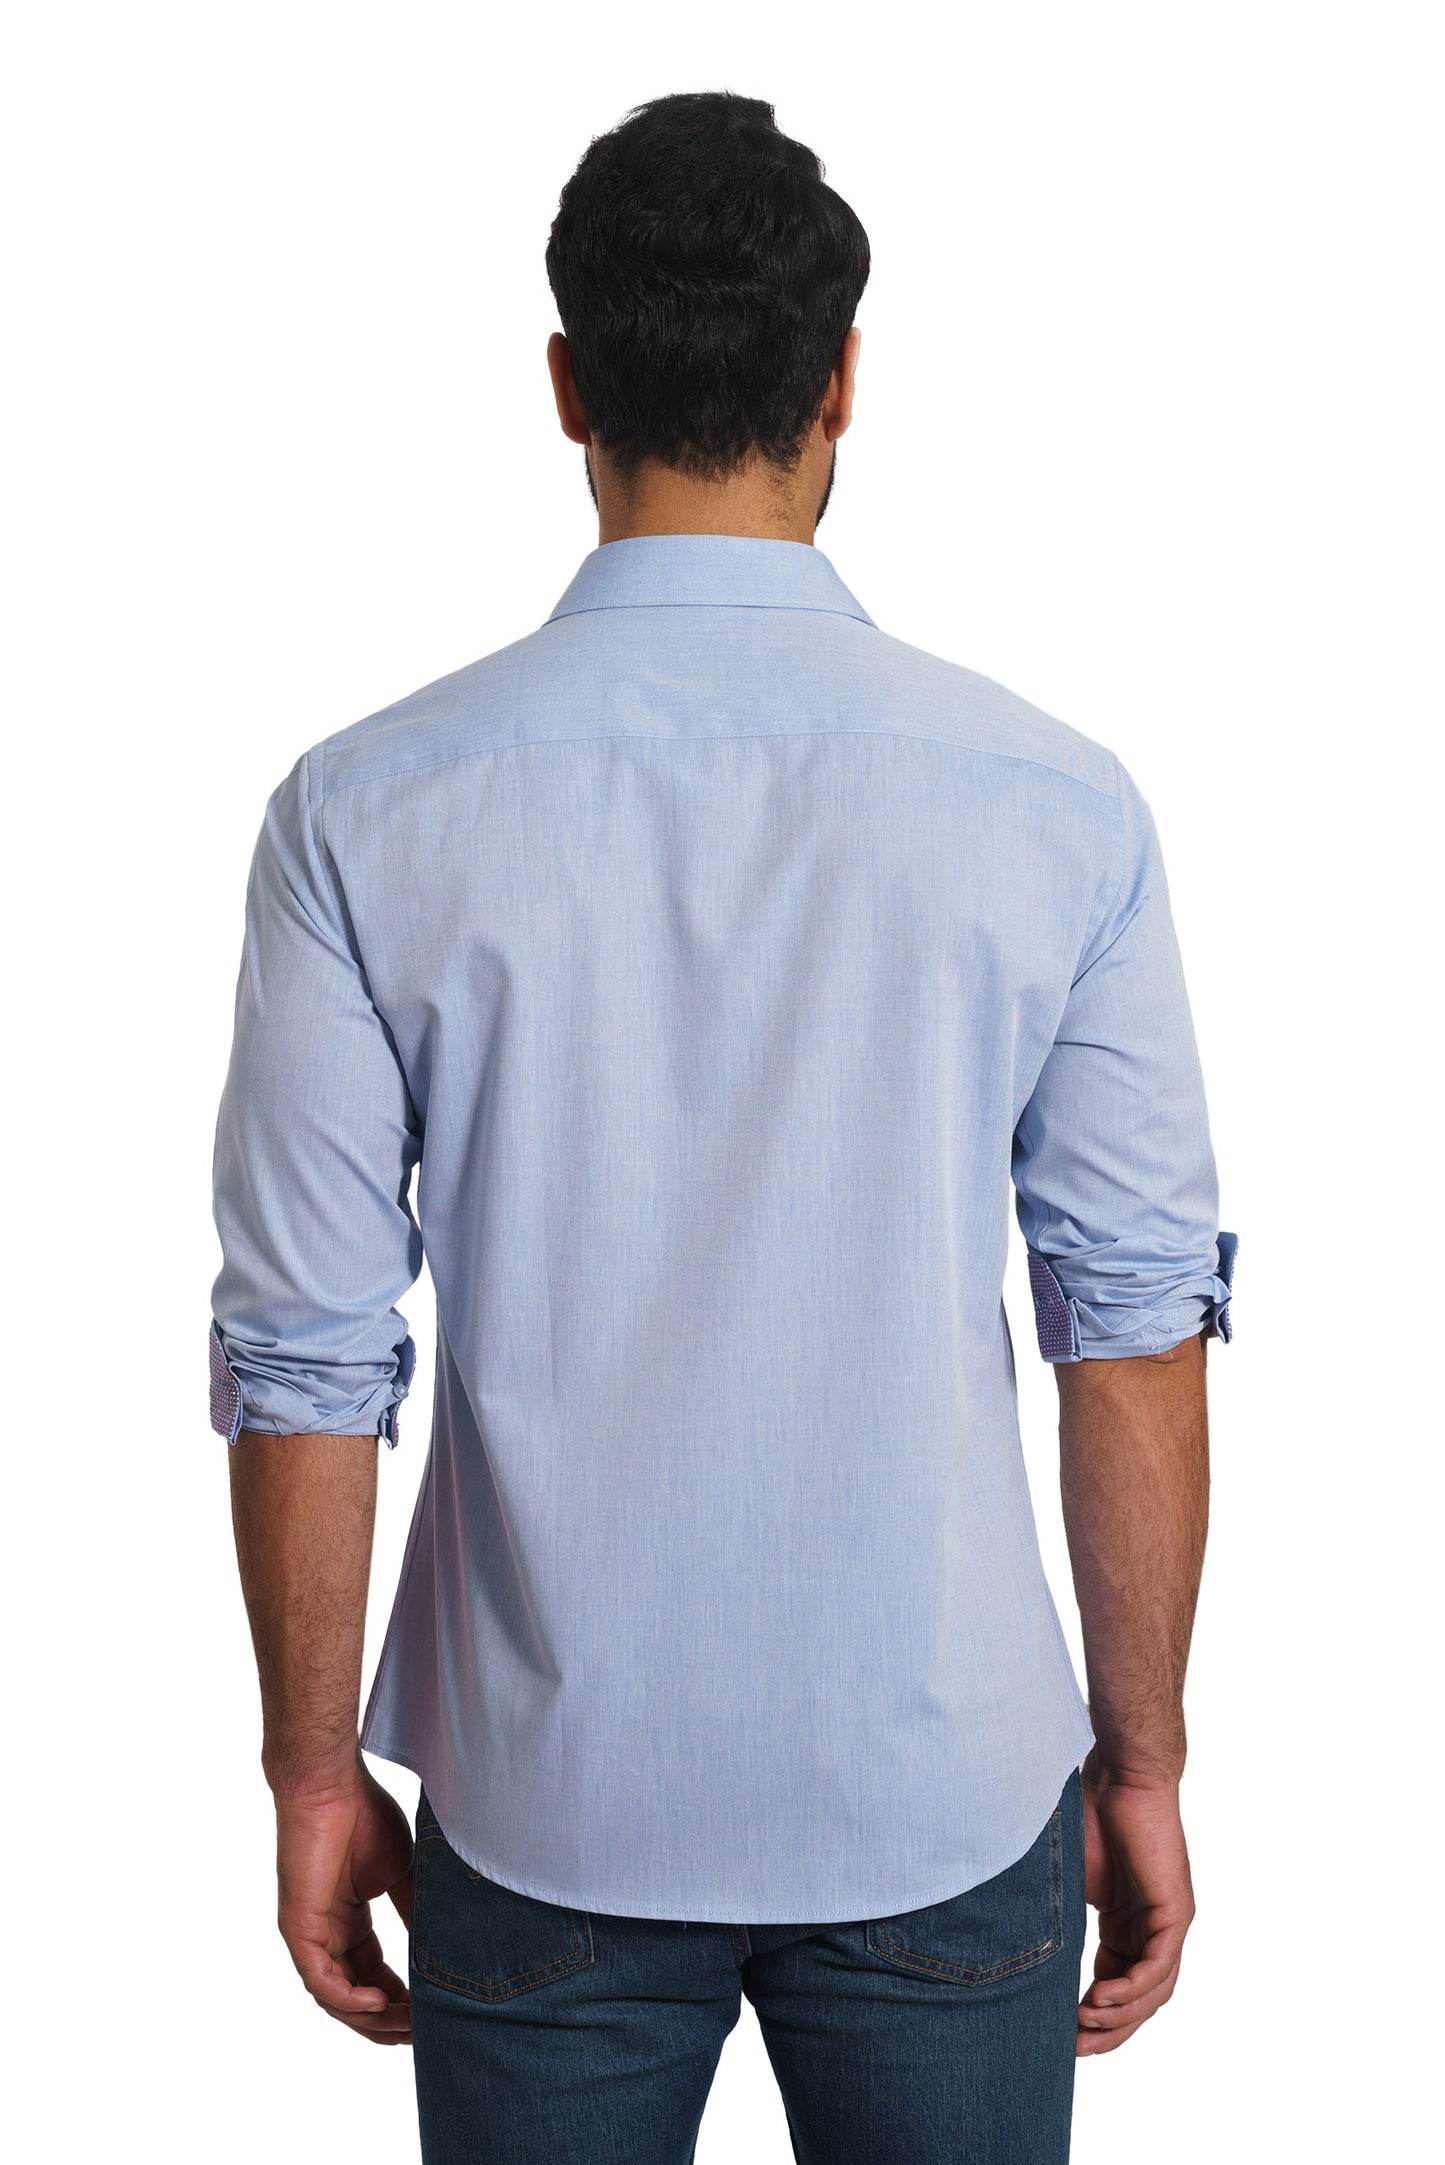 Blue Long Sleeve Shirt TH-2853 Back